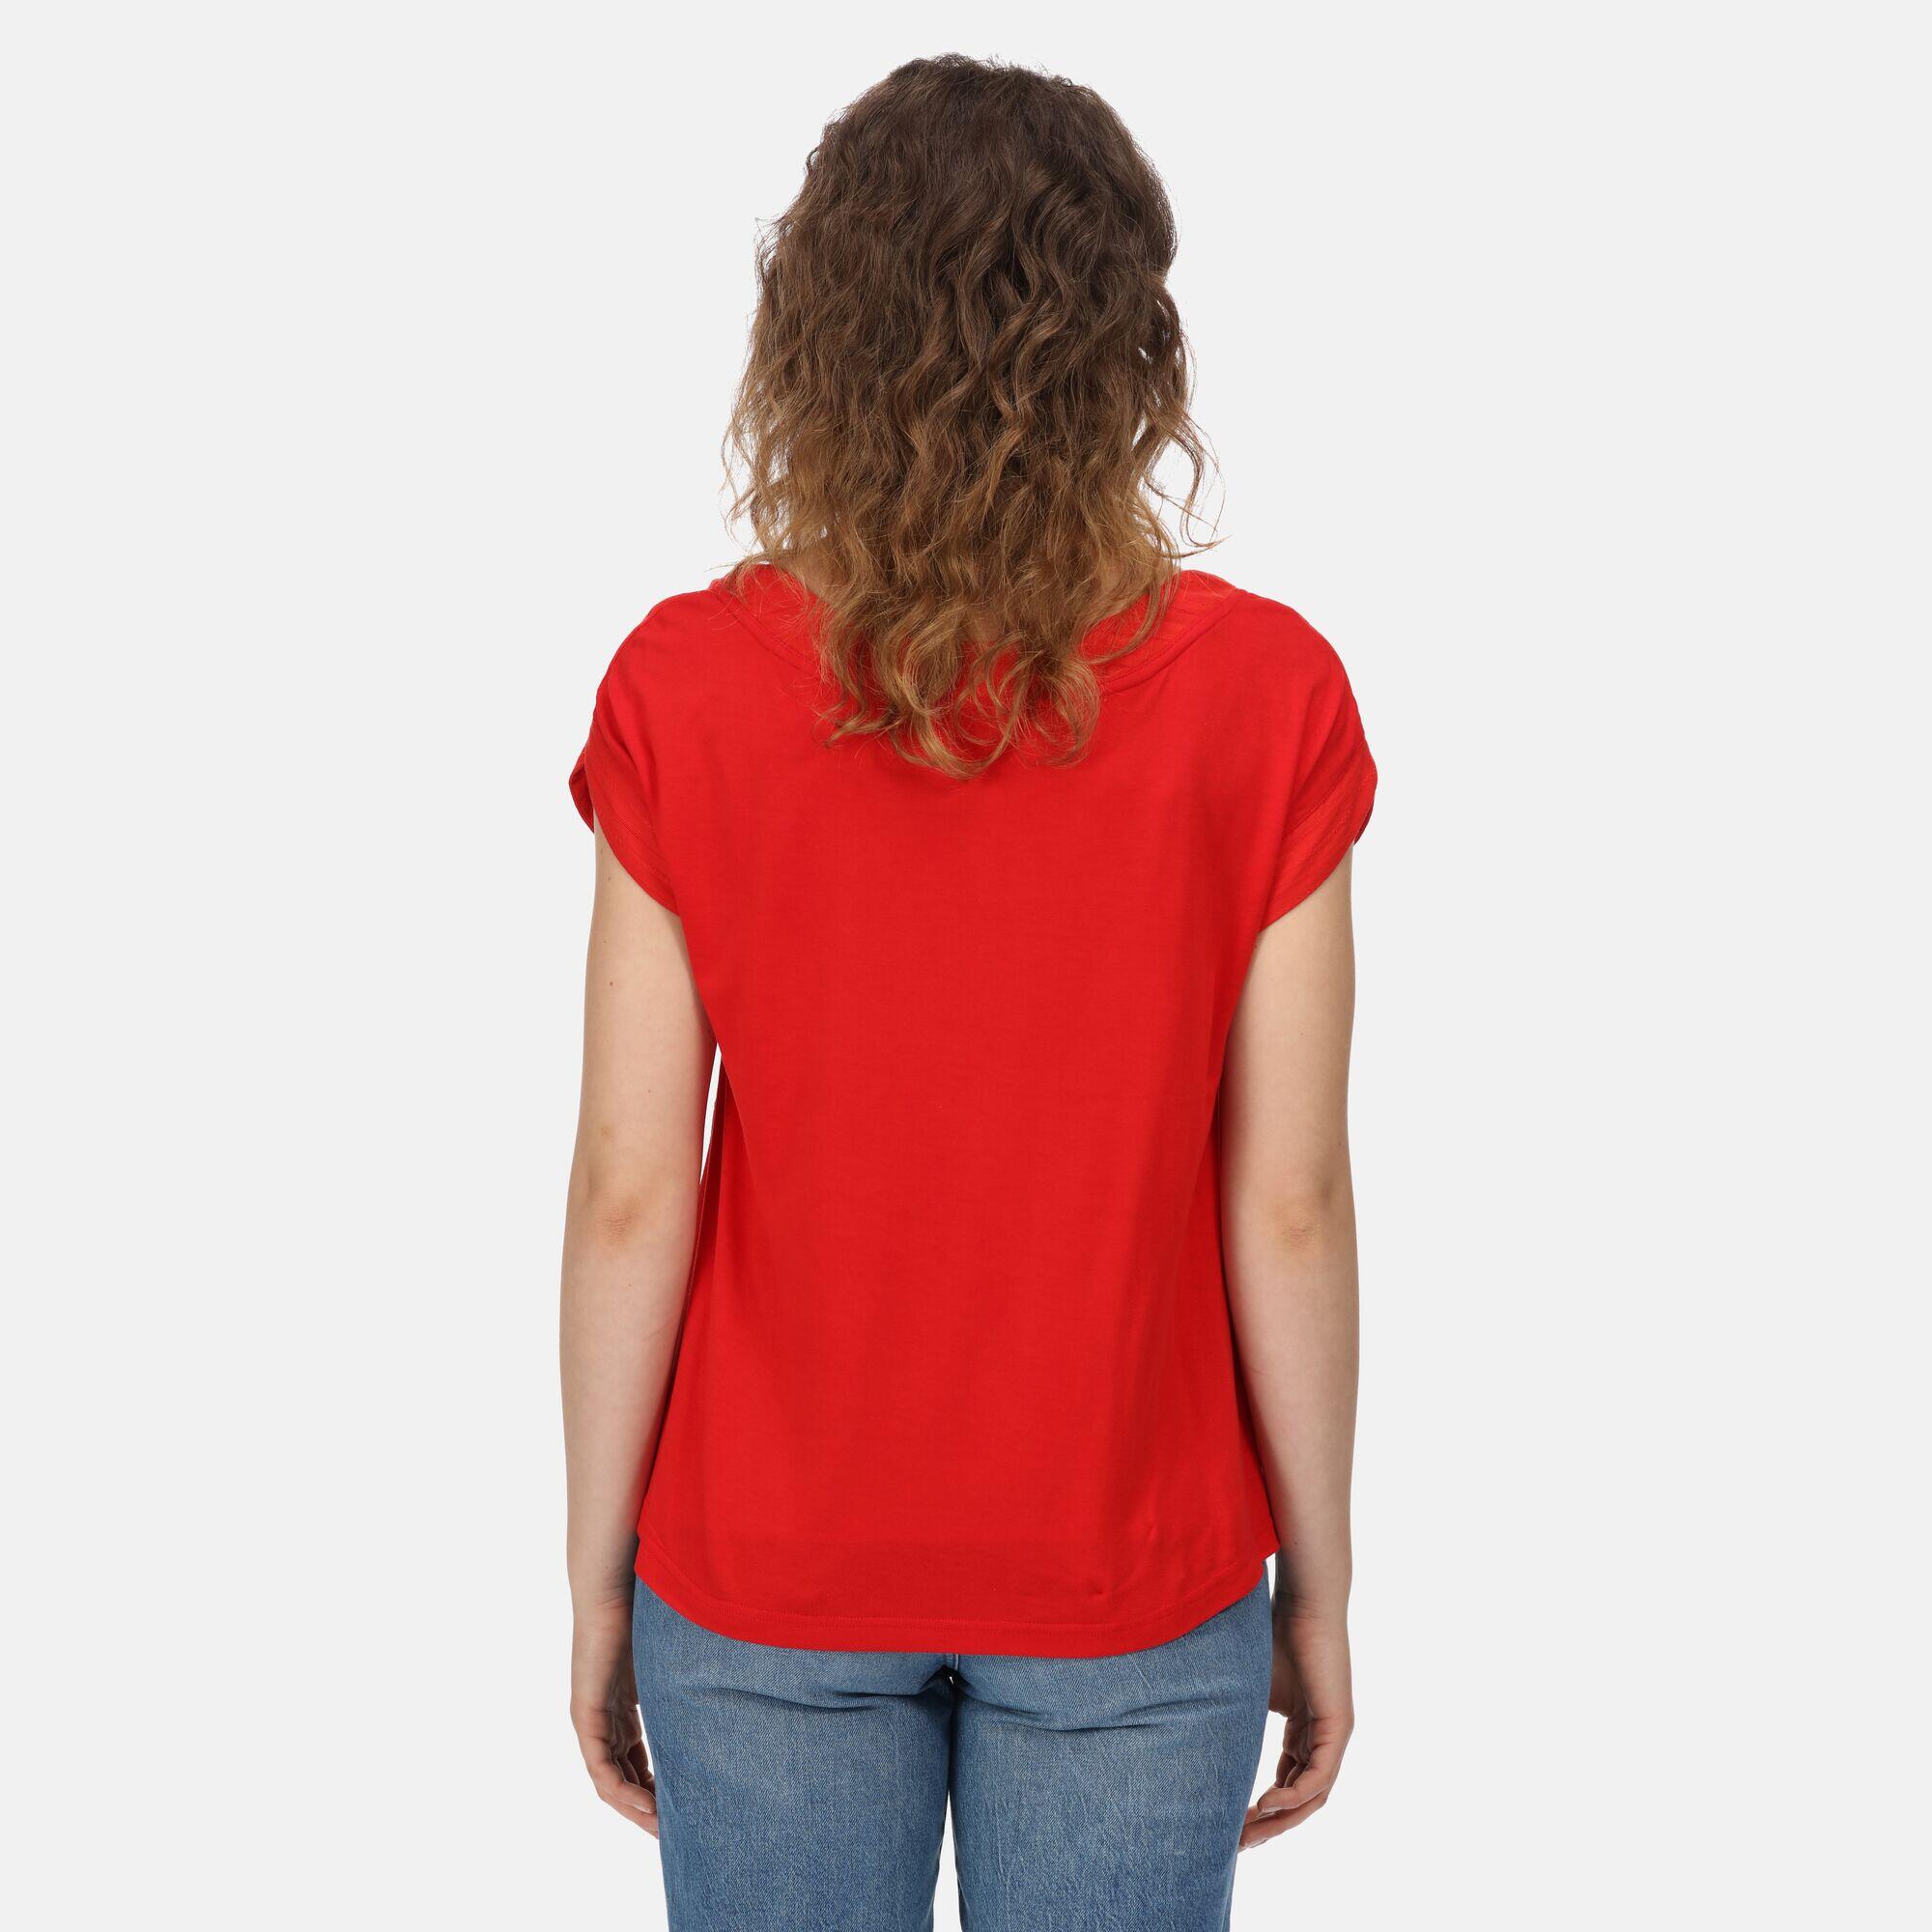 Adine Women's Walking Short Sleeve T-Shirt - True Red 2/5